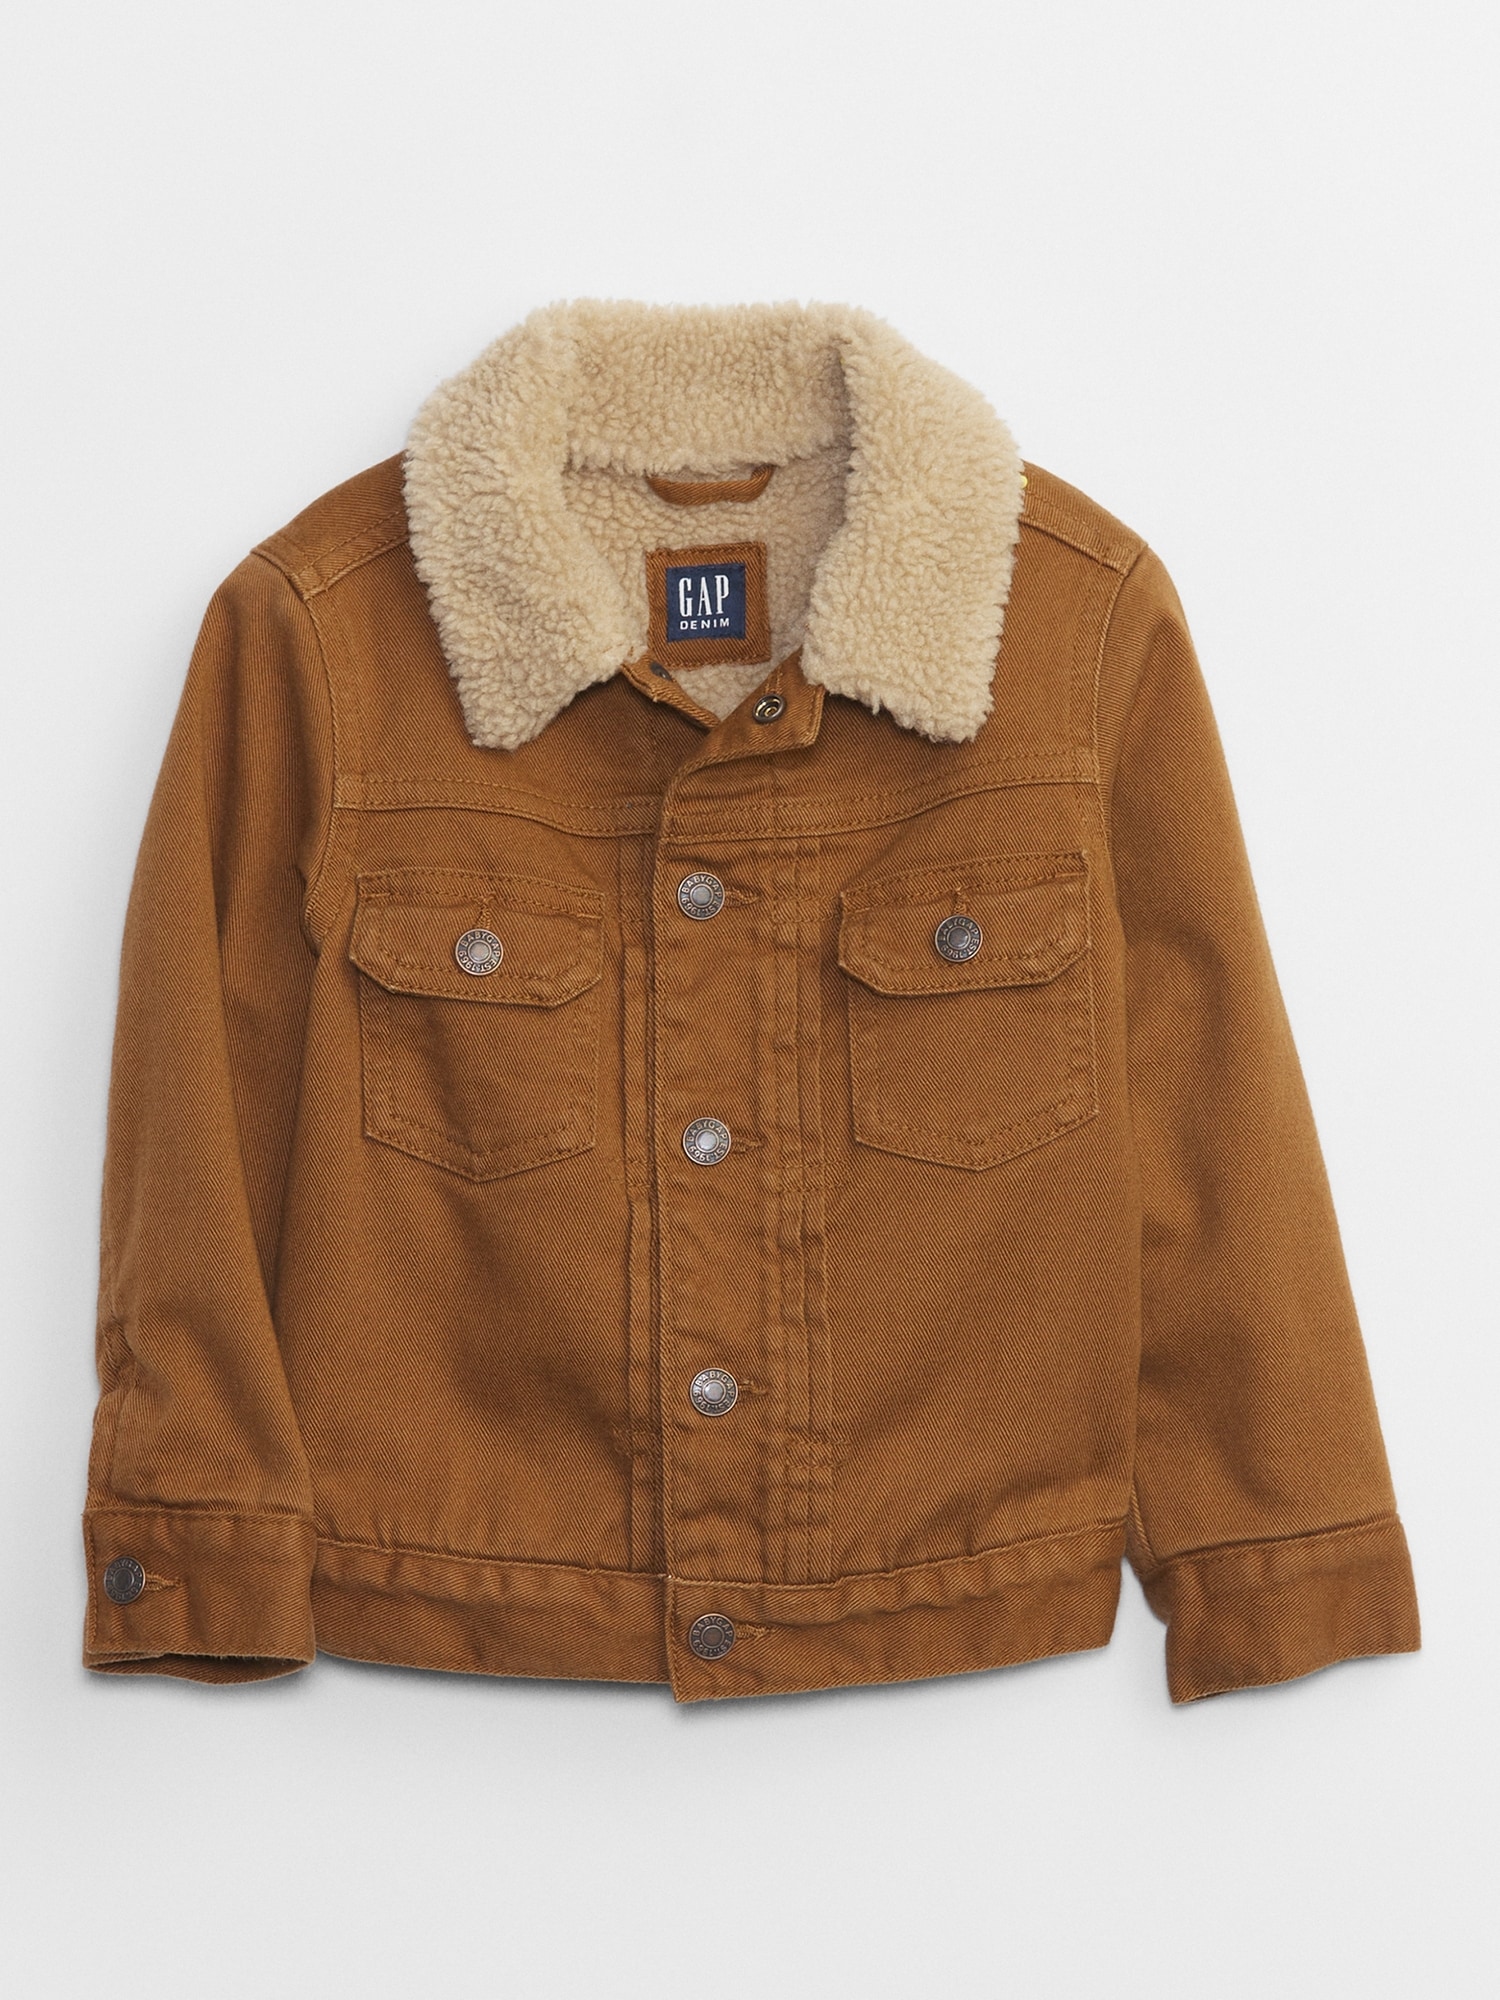 Denim Jacket With Fur Lining | Gap Factory